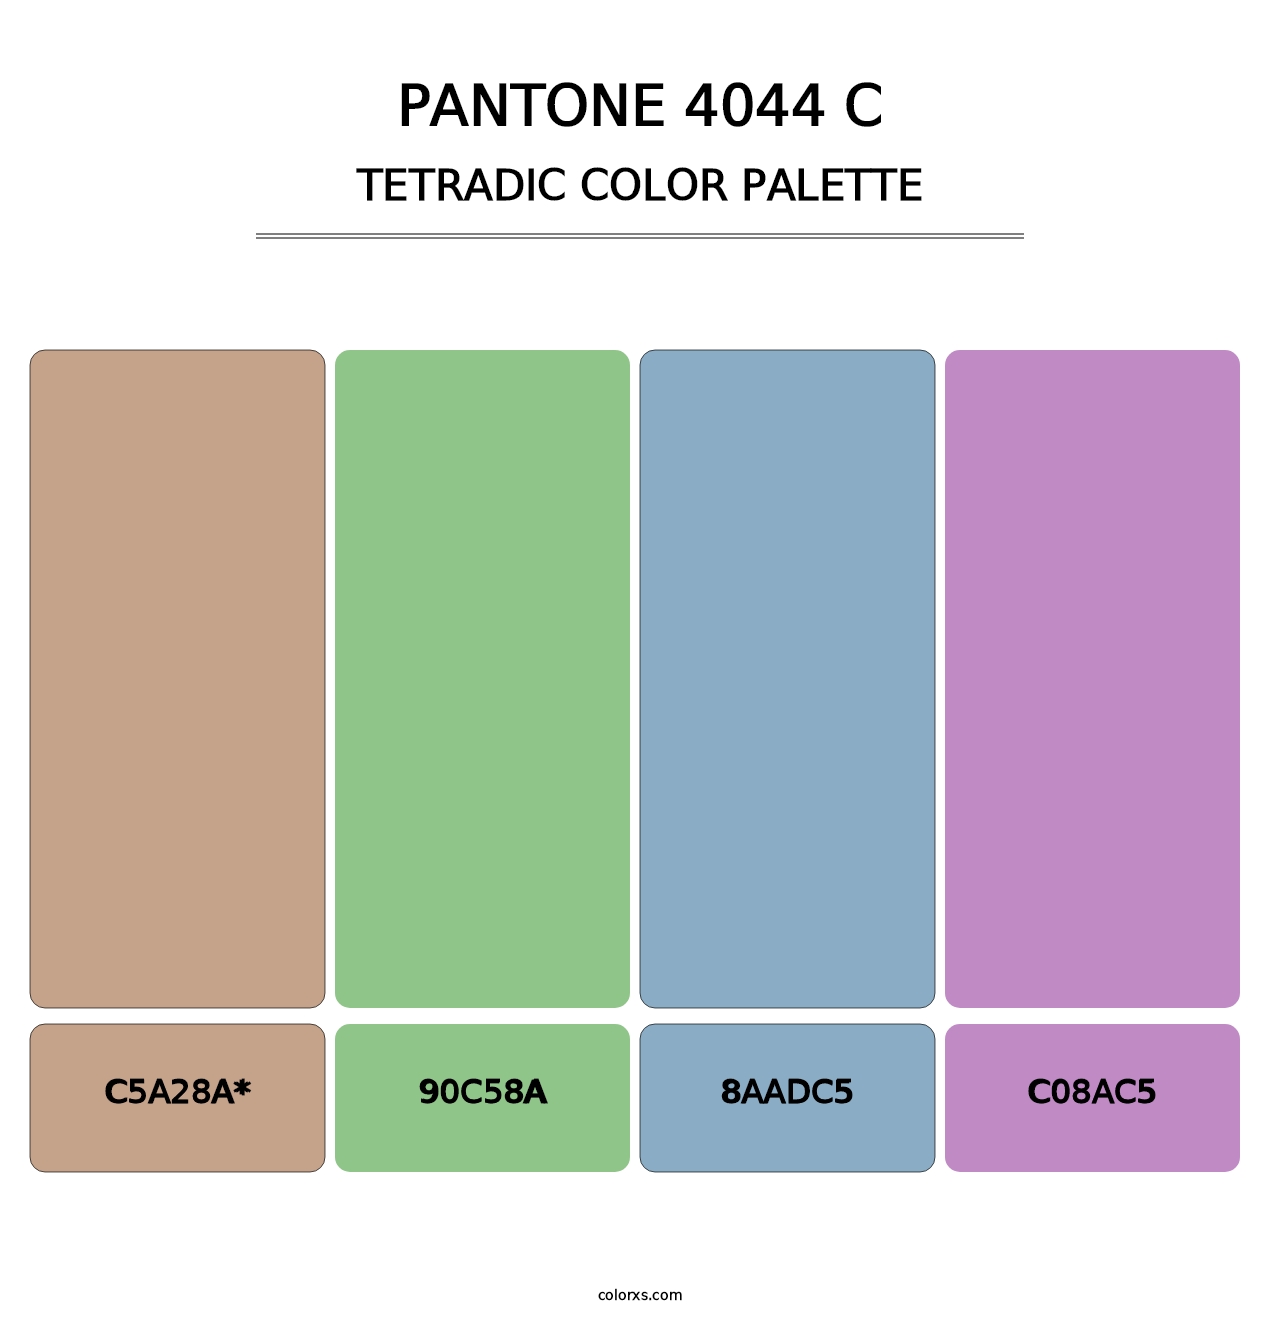 PANTONE 4044 C - Tetradic Color Palette